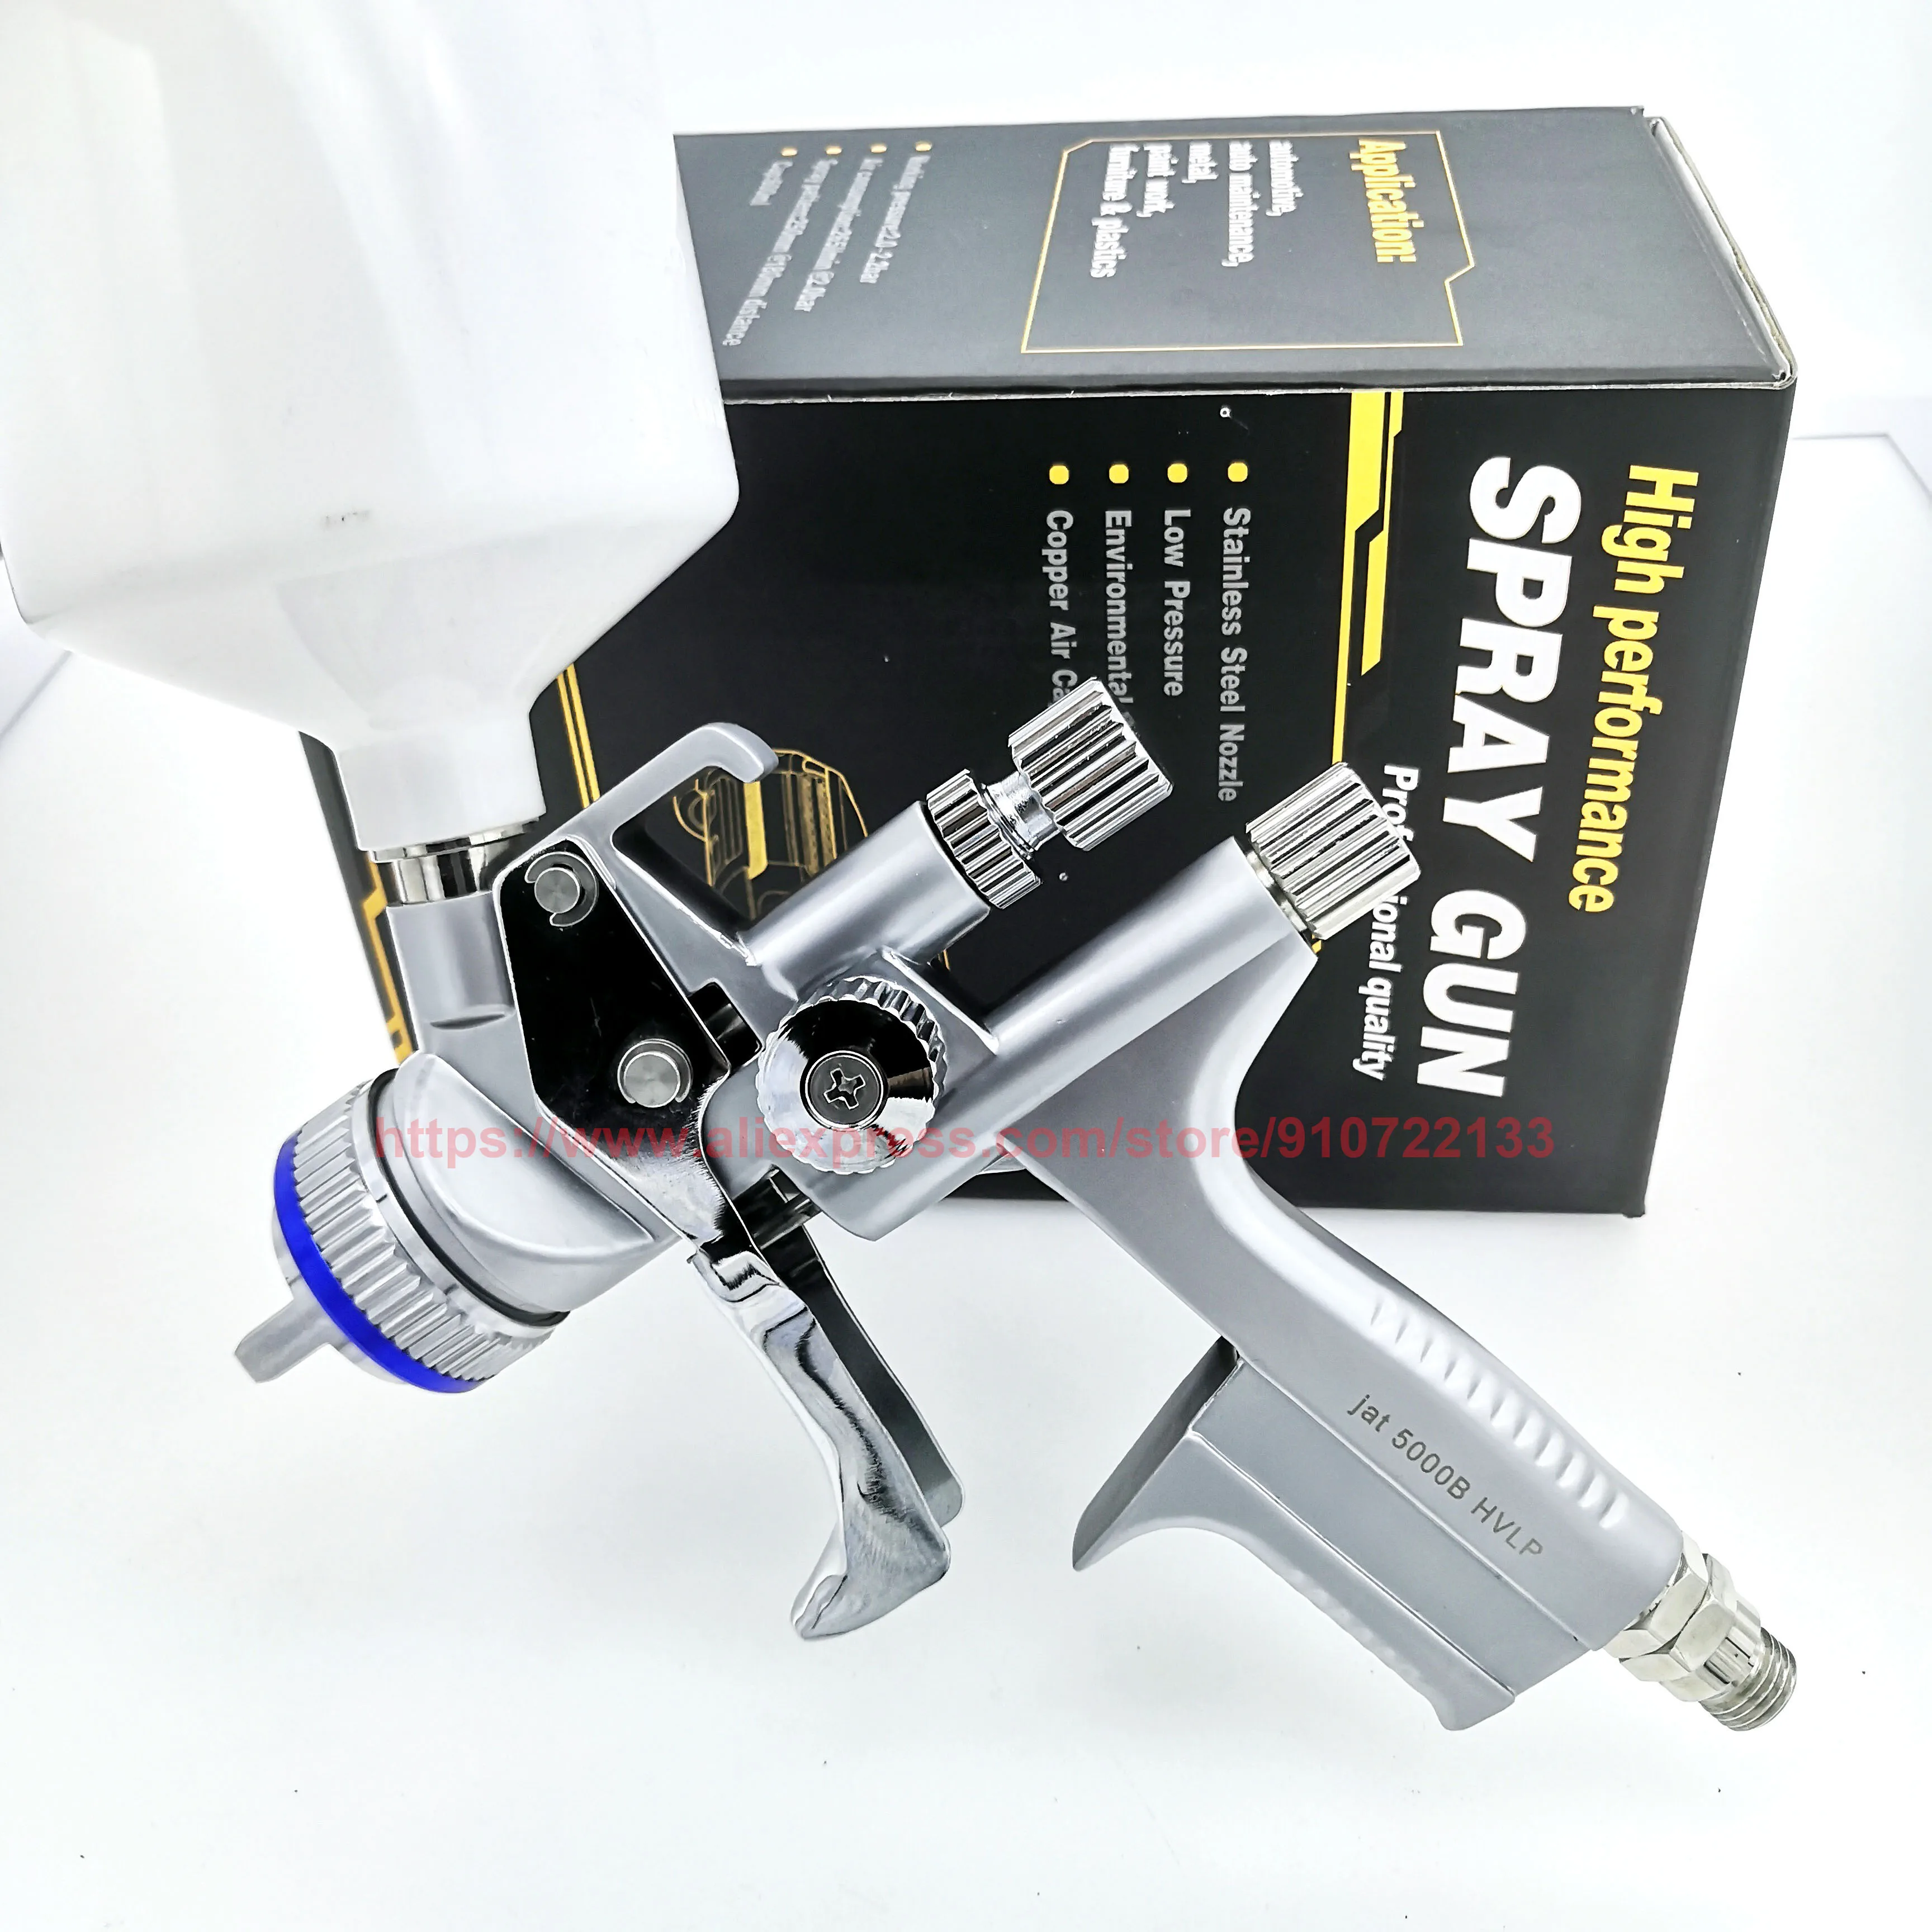 

High Efficiency Paint Spray Gun Limited Edition 5000B HVLP/RPSpray Gun-1.3 Nozzle for Car,Porsche Design Painted Sprayer Gun